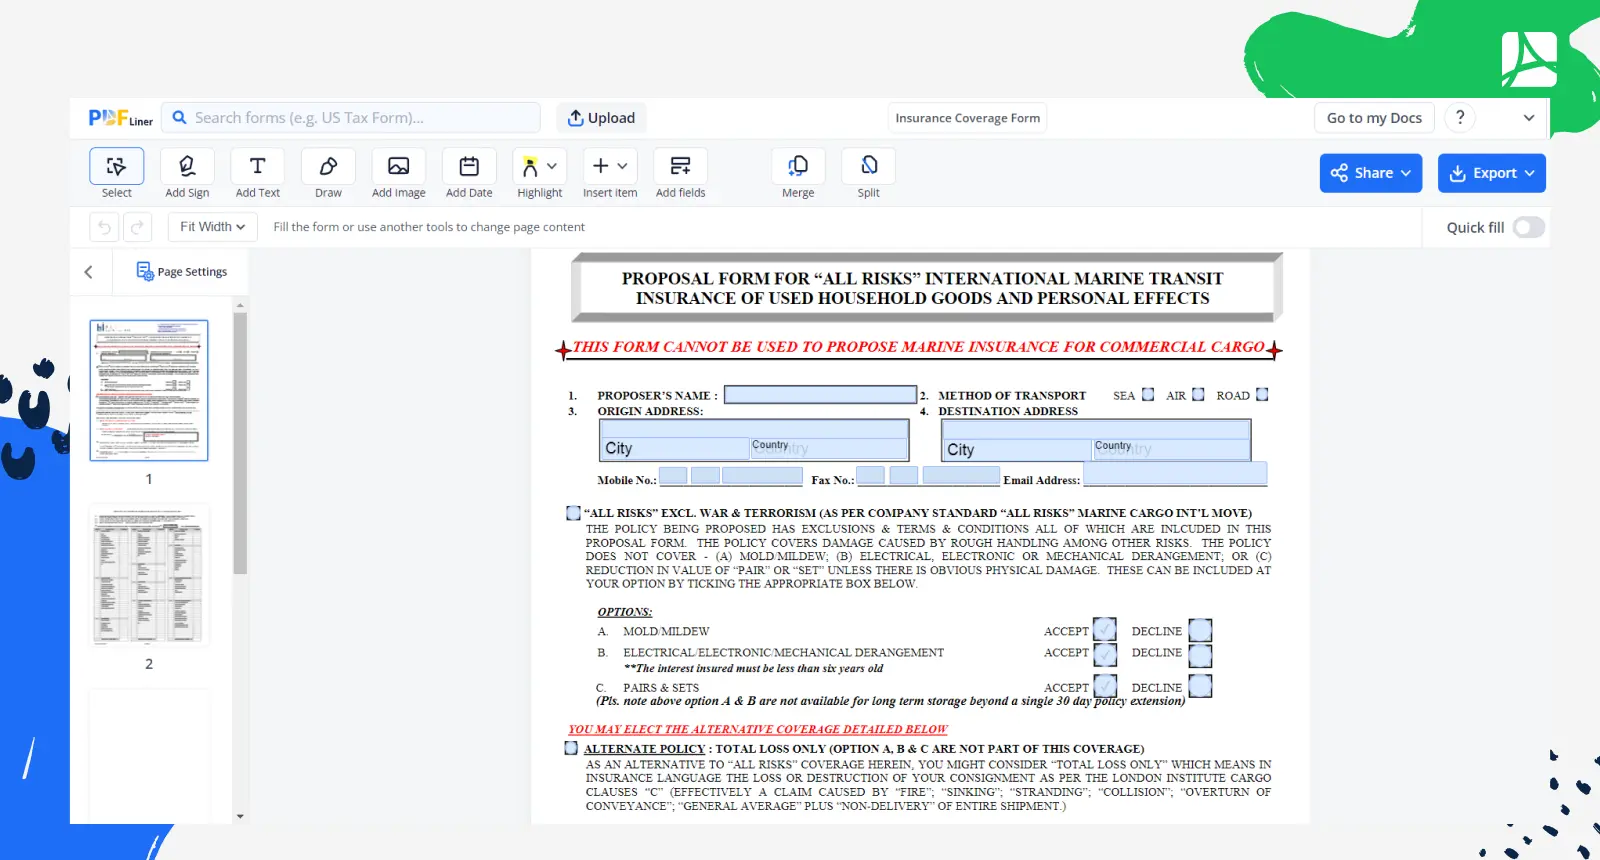 Insurance Coverage Form Screenshot